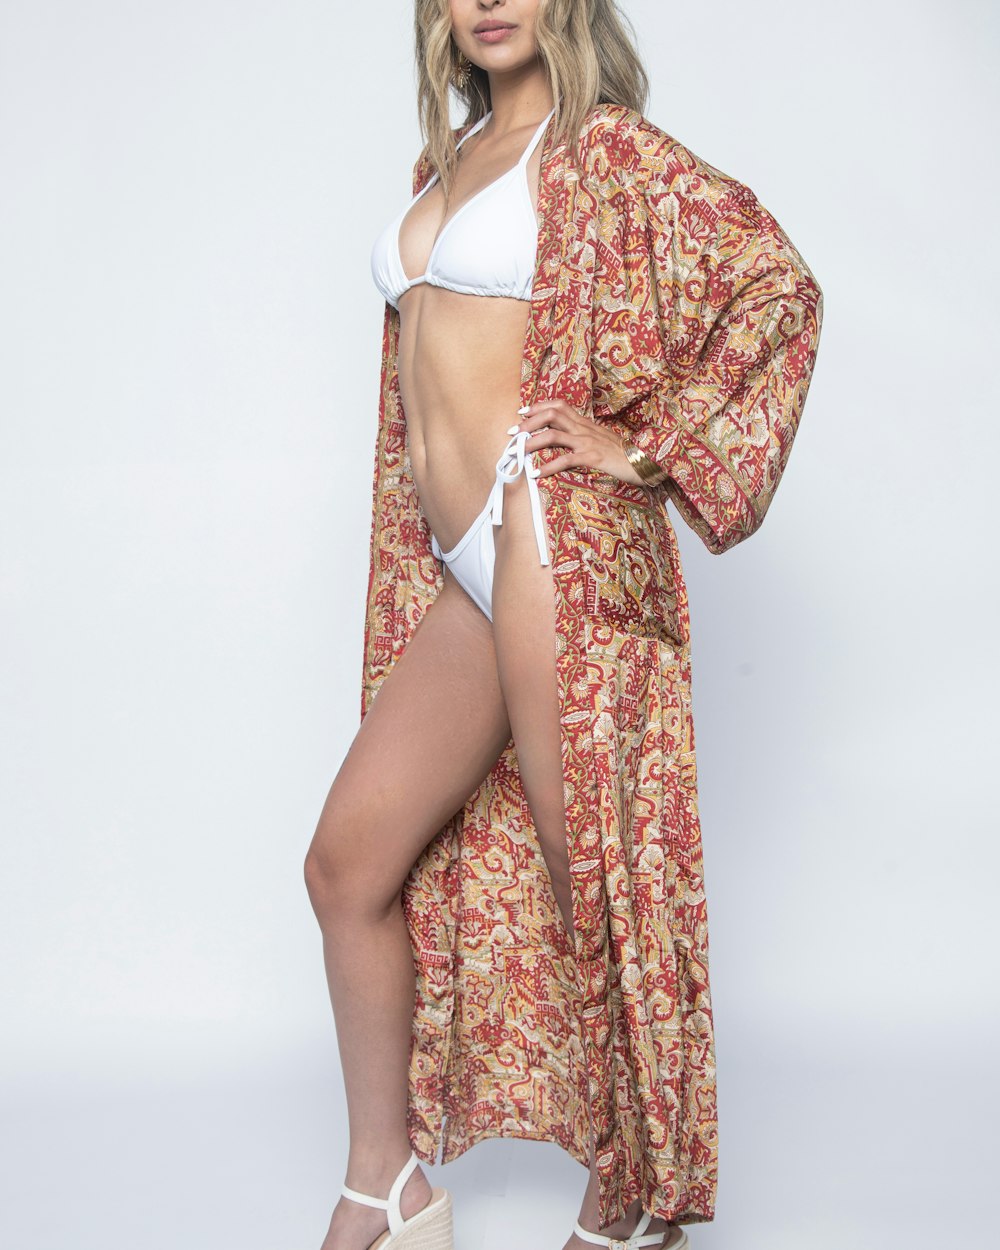 eine Frau im Bikini und Kimono